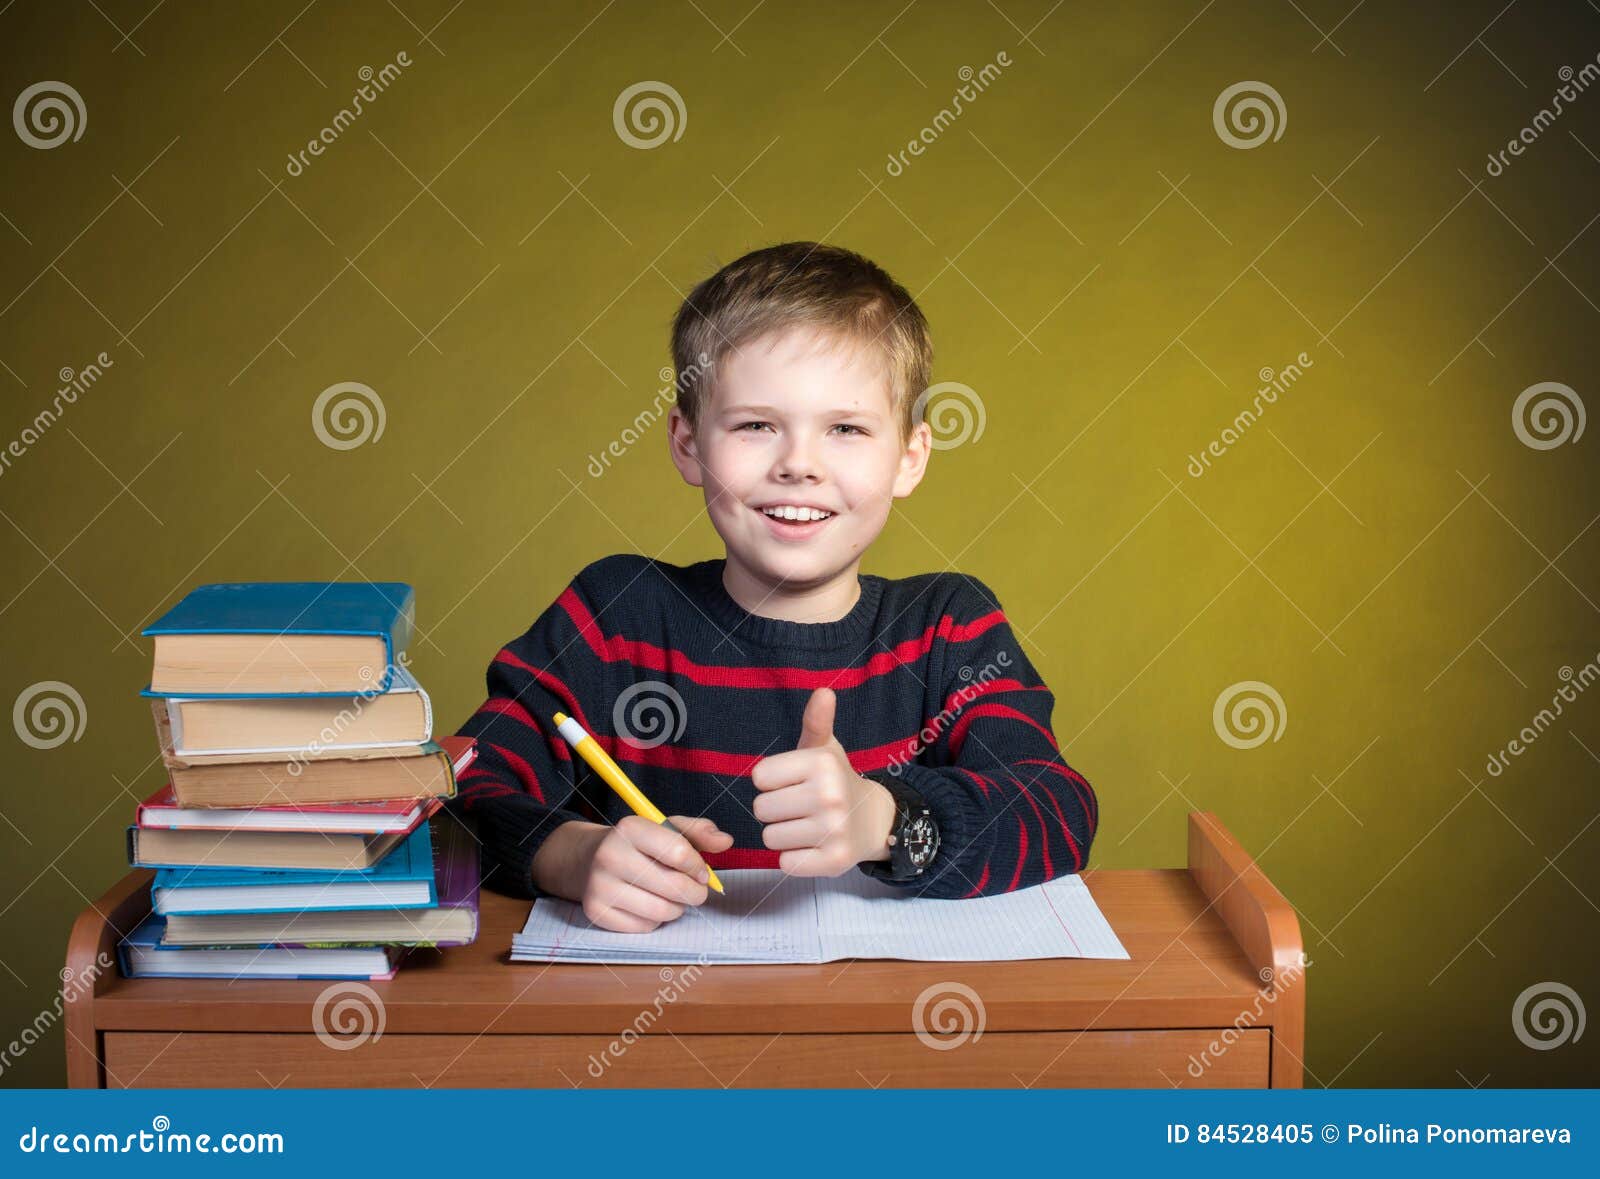 kid doing homework happy